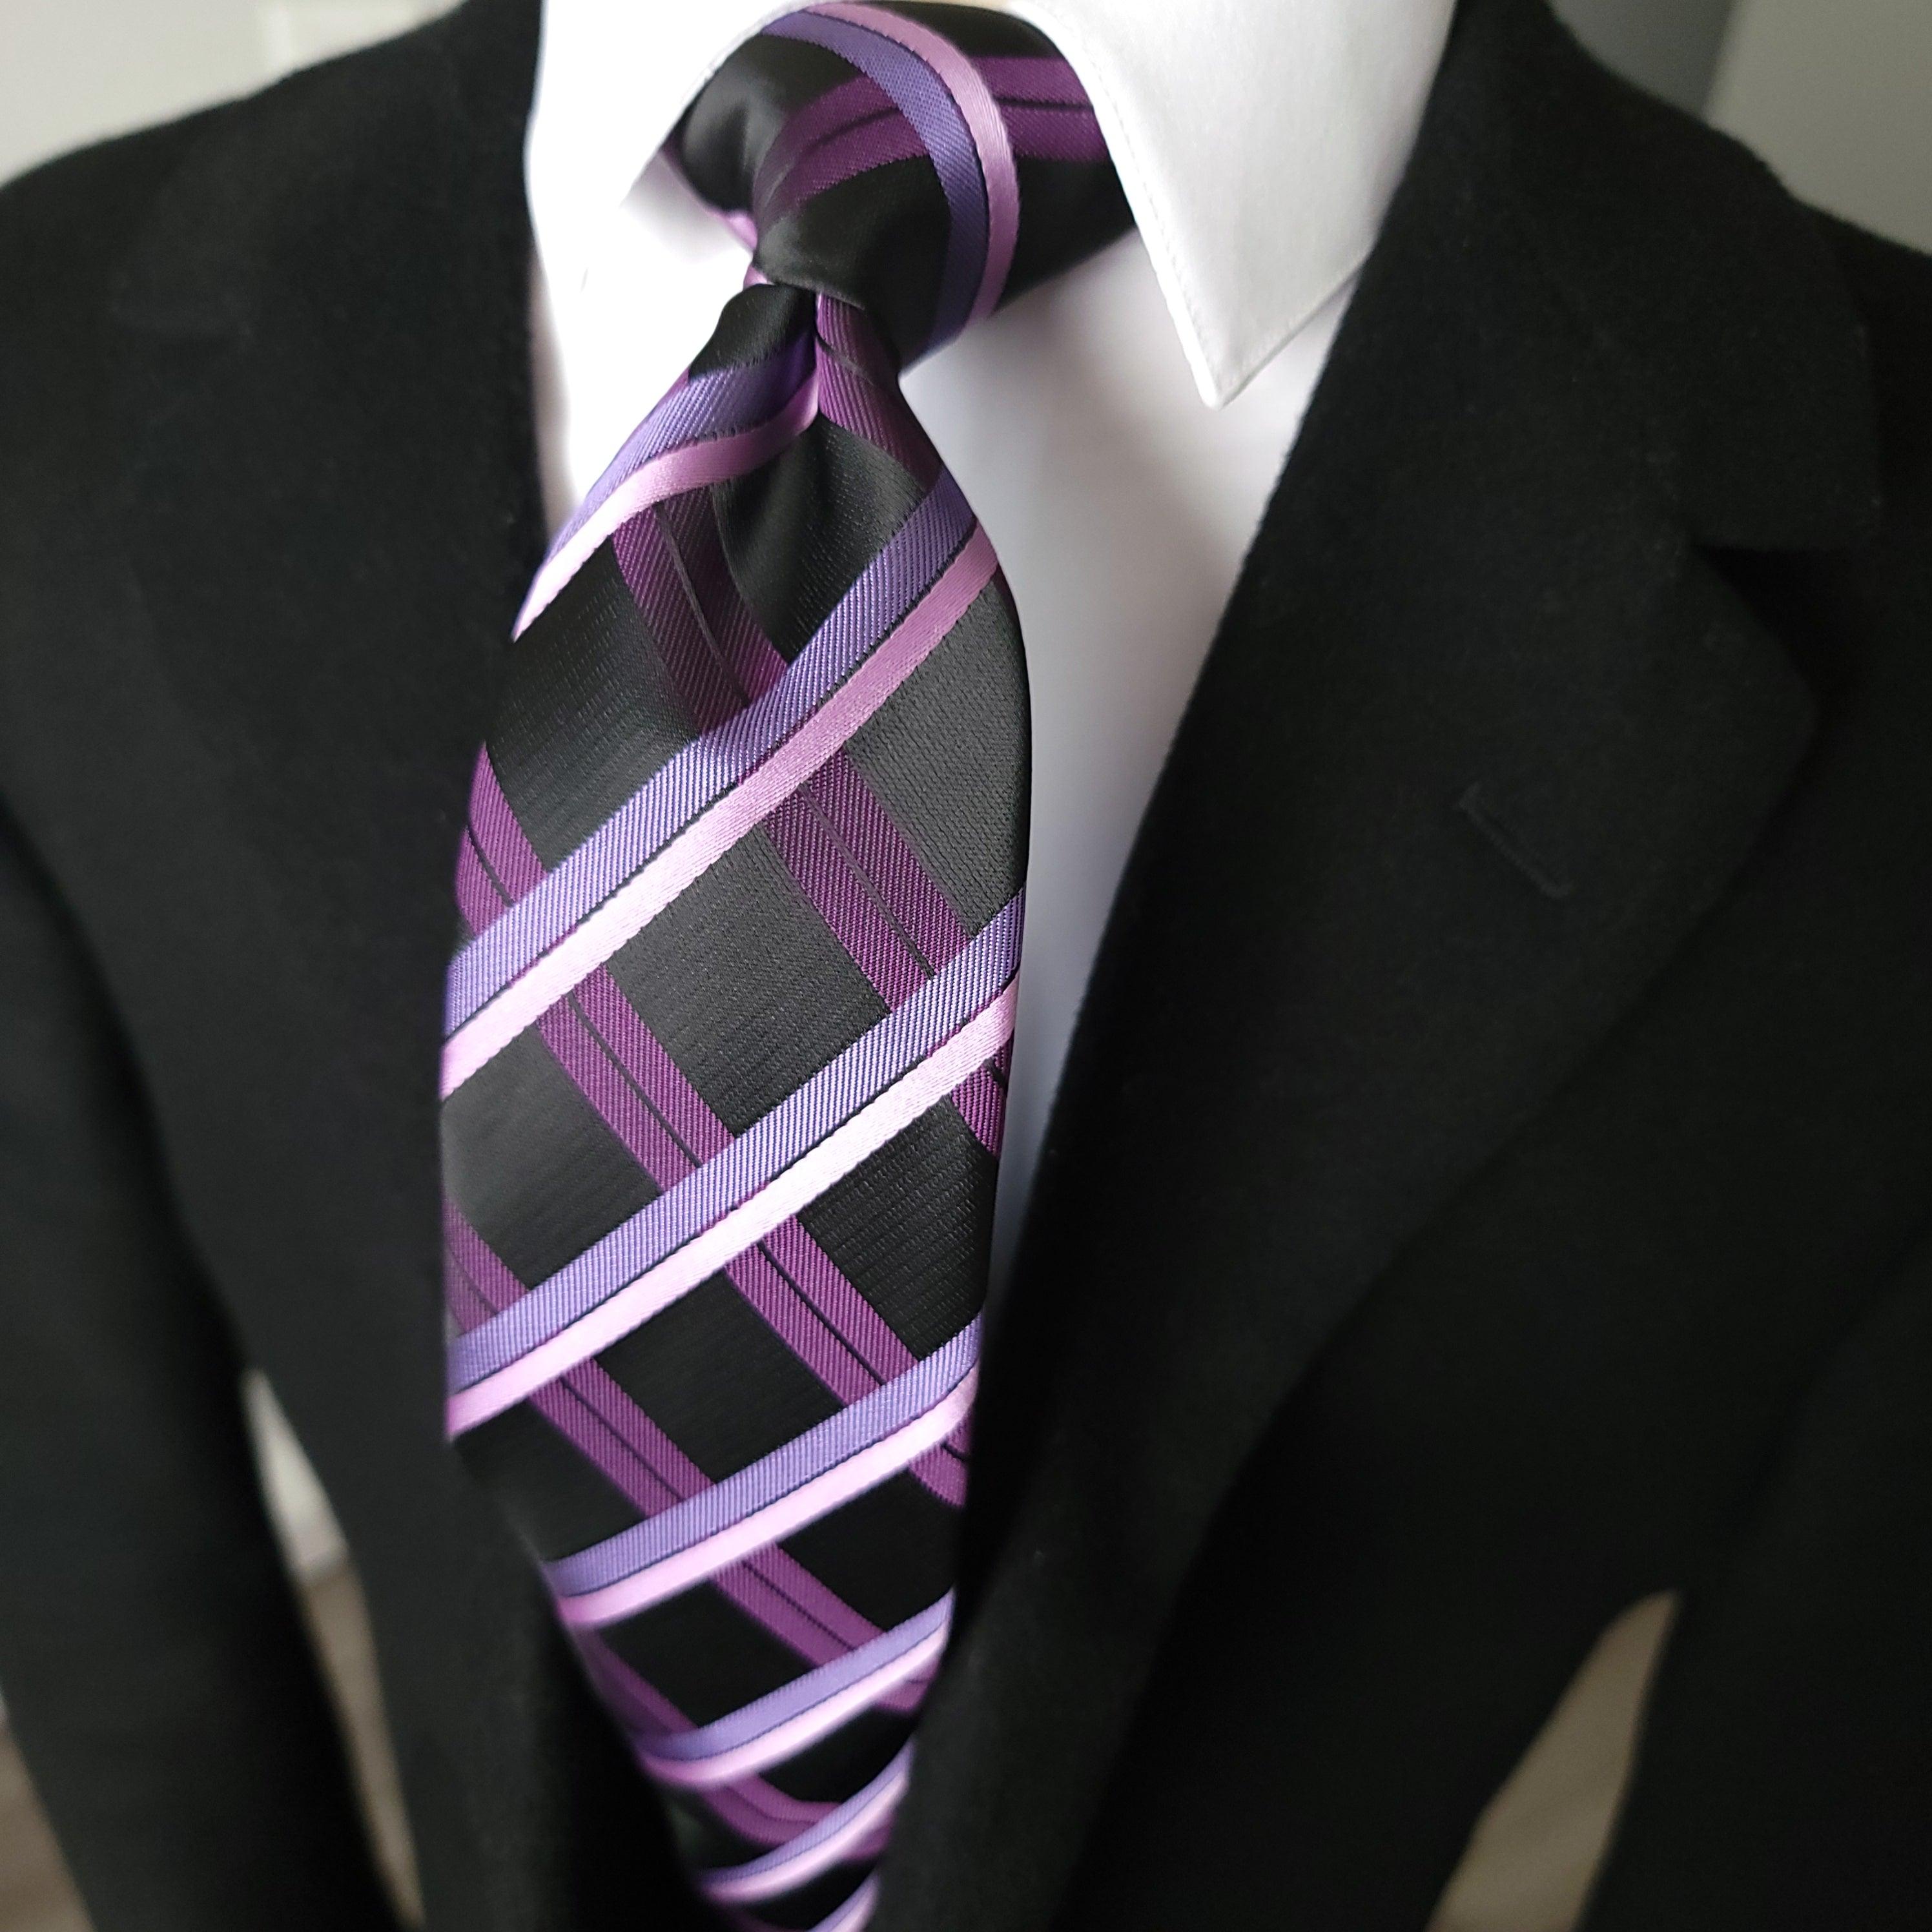 Black Purple Plaid Silk Tie - STYLETIE